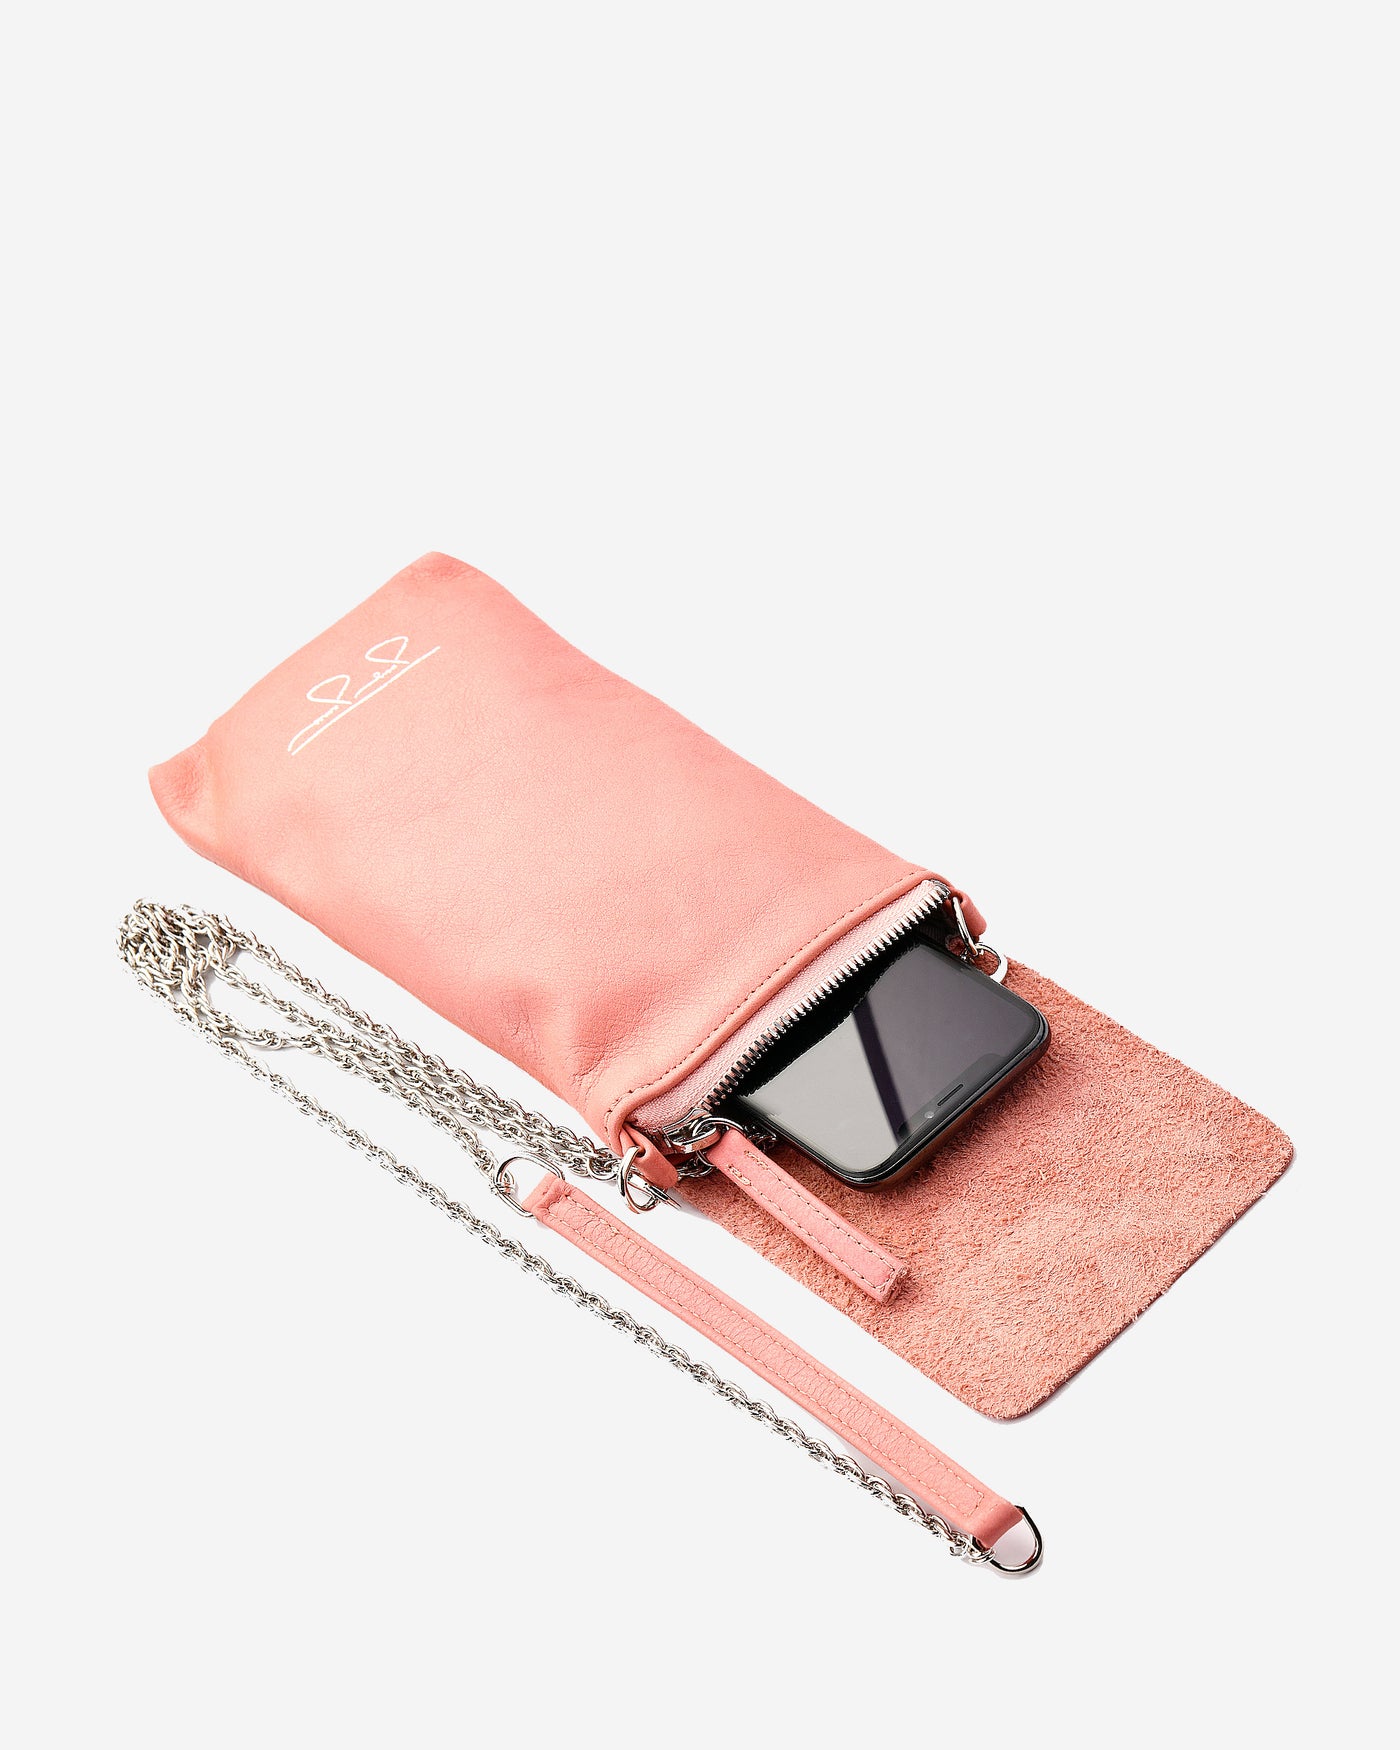 Alex Phone Bag - Buffed Pink Phone Bag Joey James, The Label   